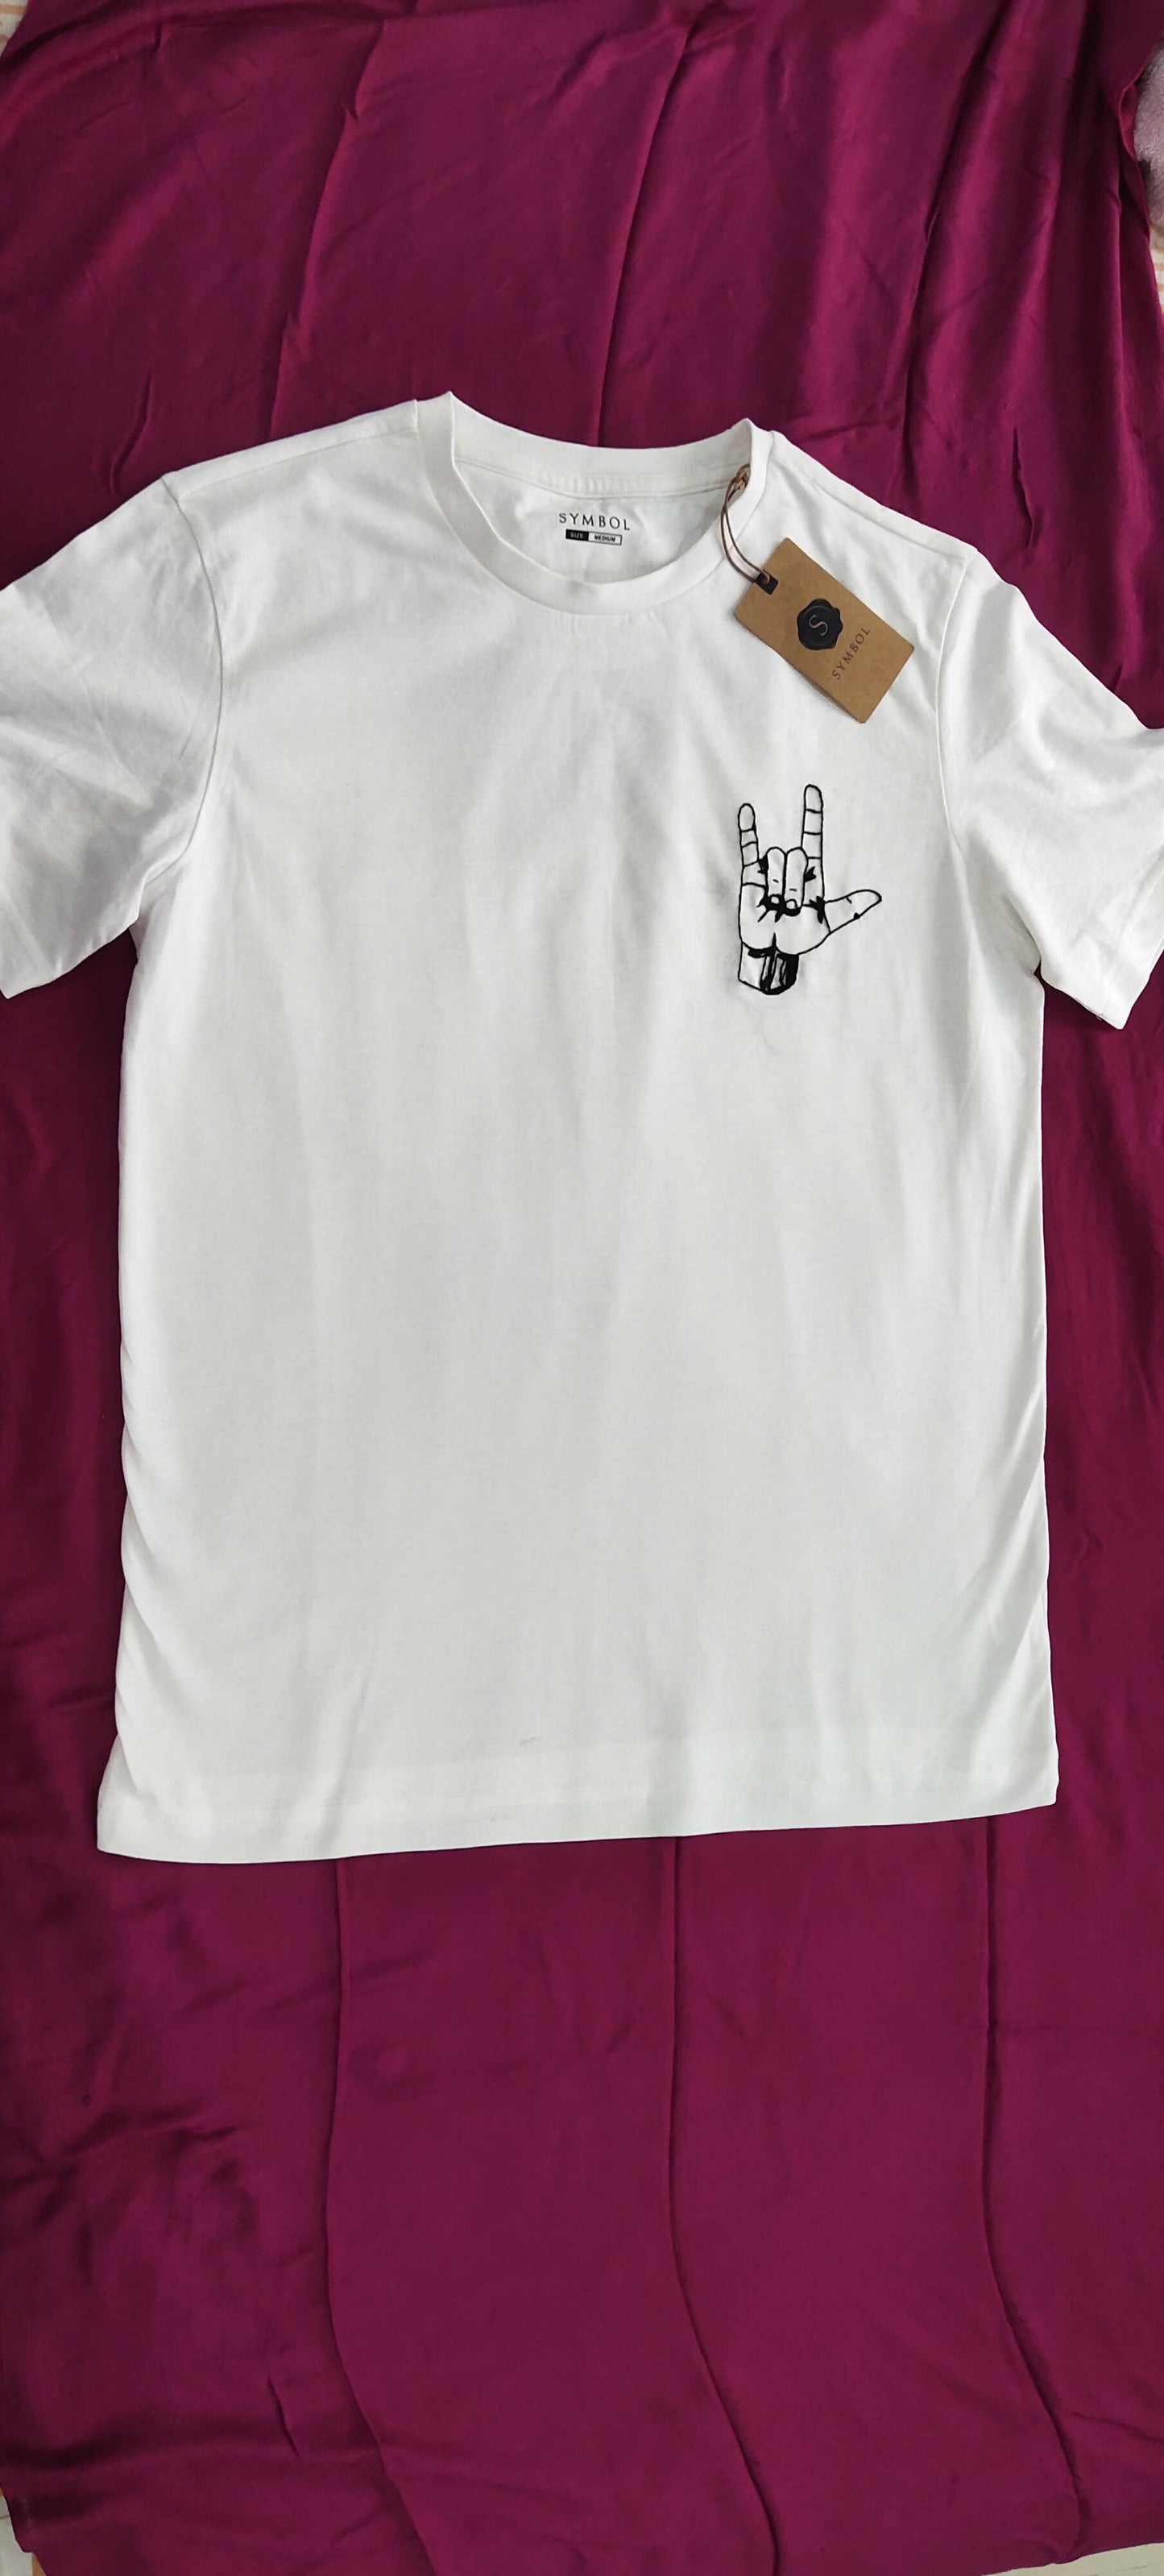 Rock-on hand-embroidery T-shirt | Large size T-shirt | Unisex T-shirt | Casual wear | Multi-seasonal wear | Comfortable